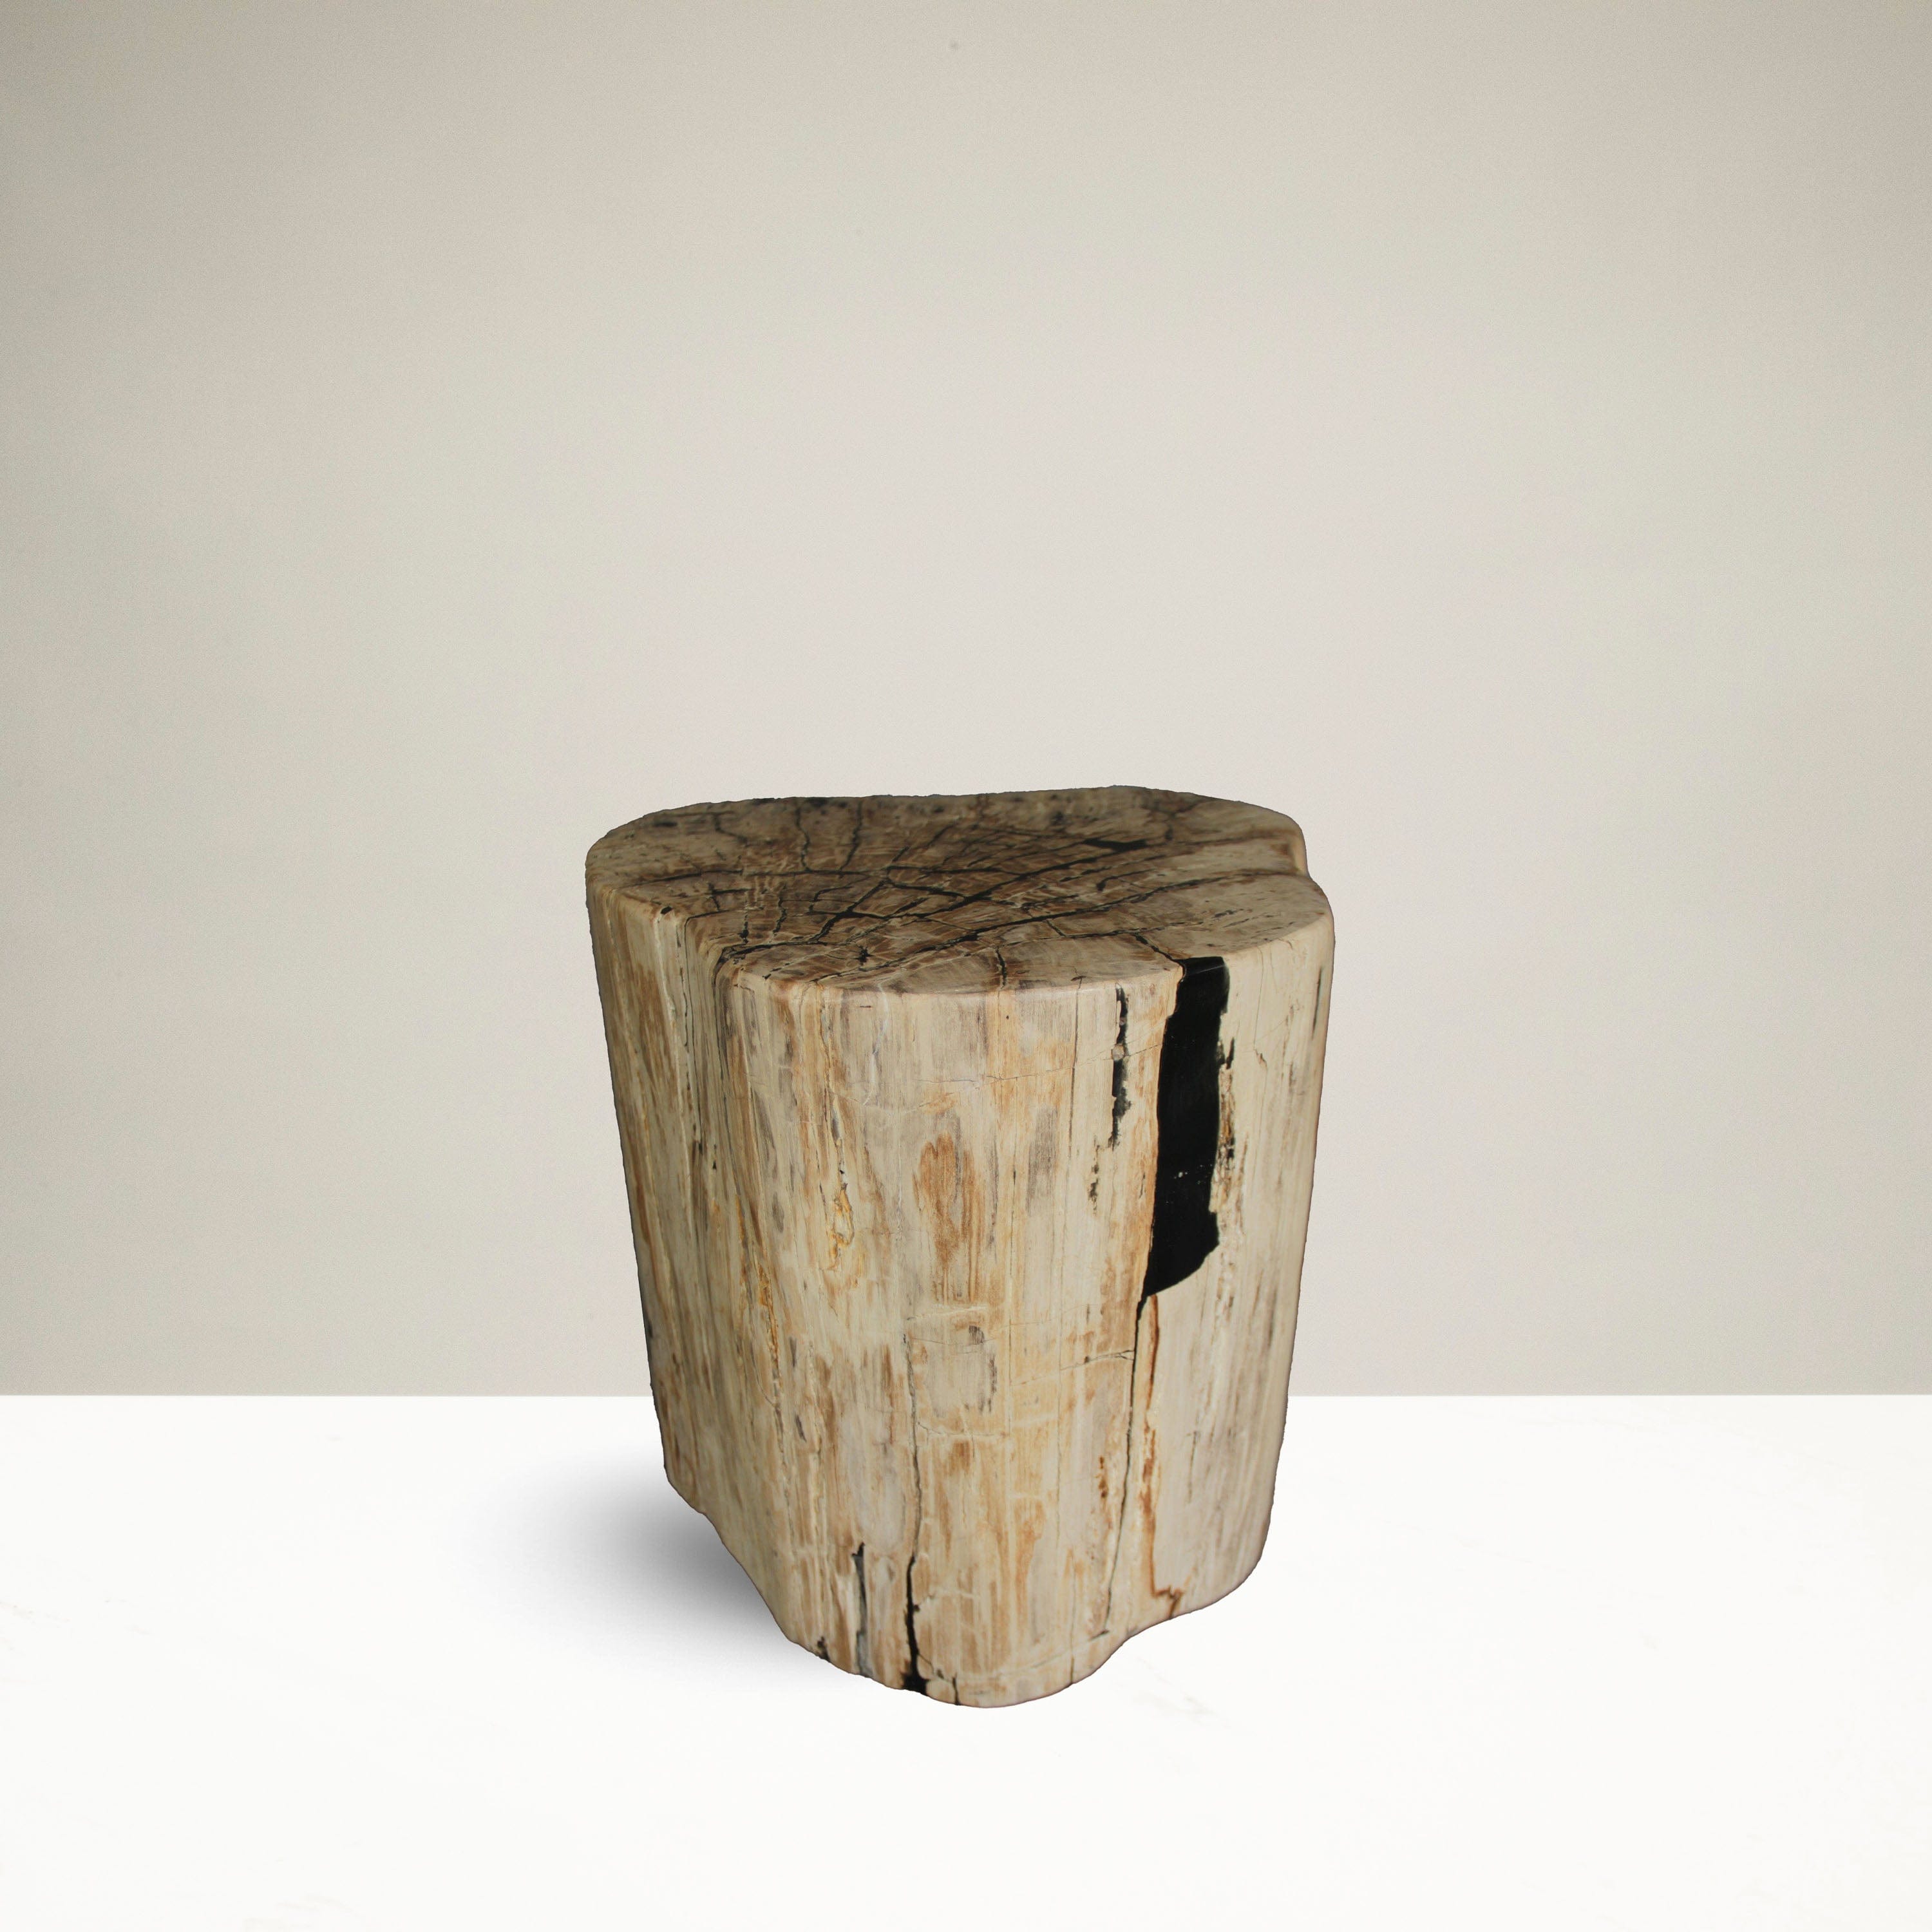 Kalifano Petrified Wood Petrified Wood Round Stump / Stool from Indonesia - 16" / 240 lbs PWS4400.007